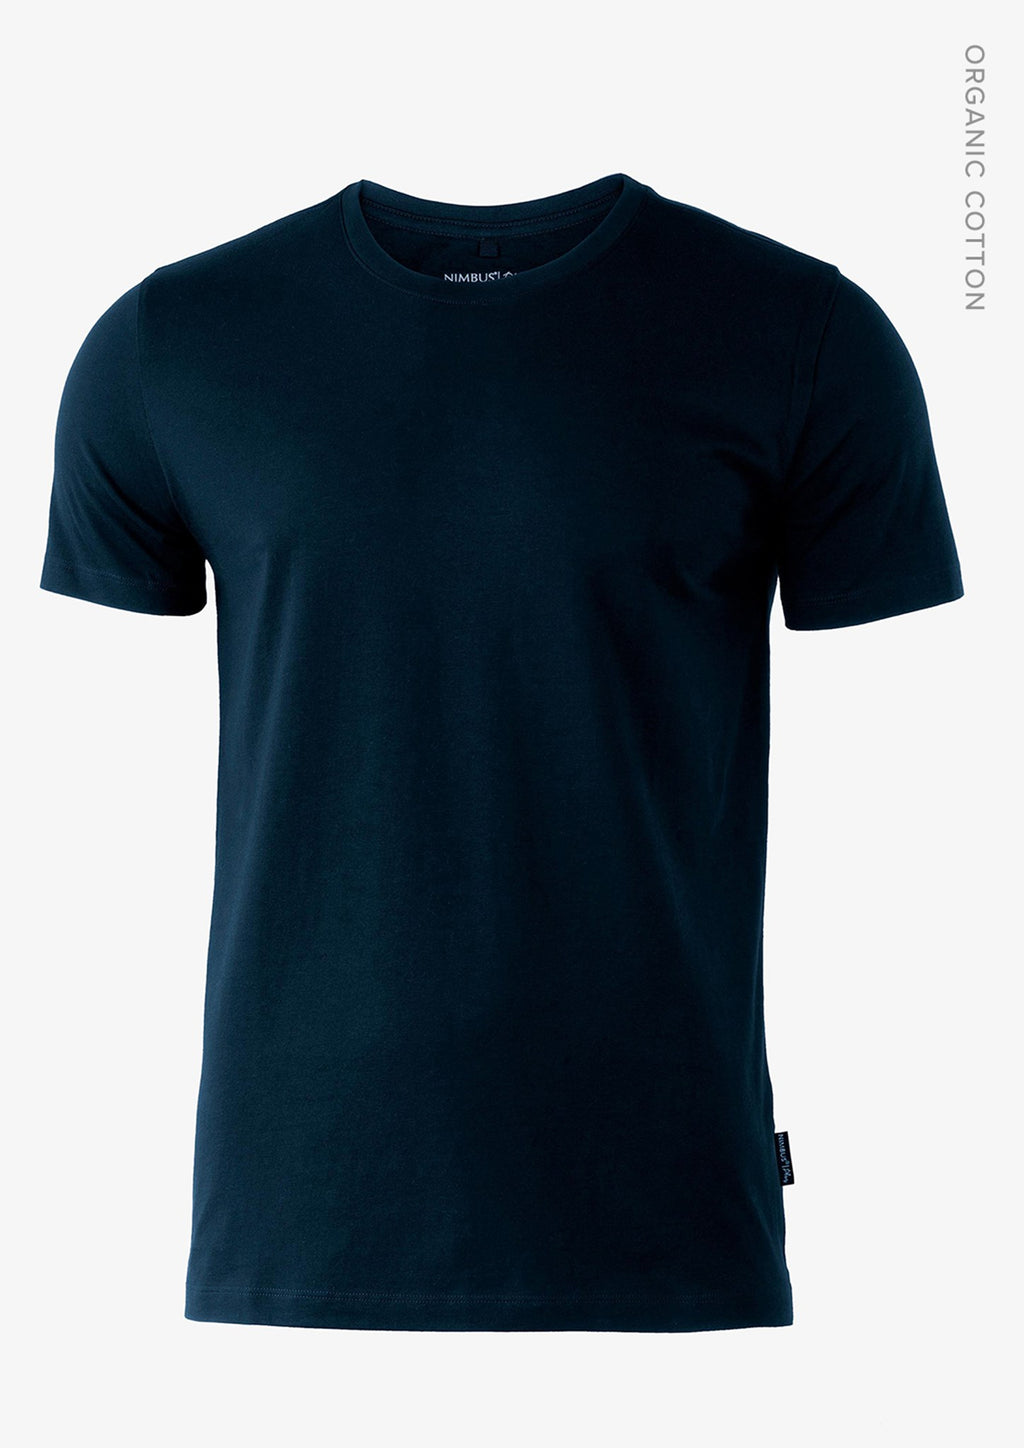 Shirt short sleeve man Academy IV melange gray black